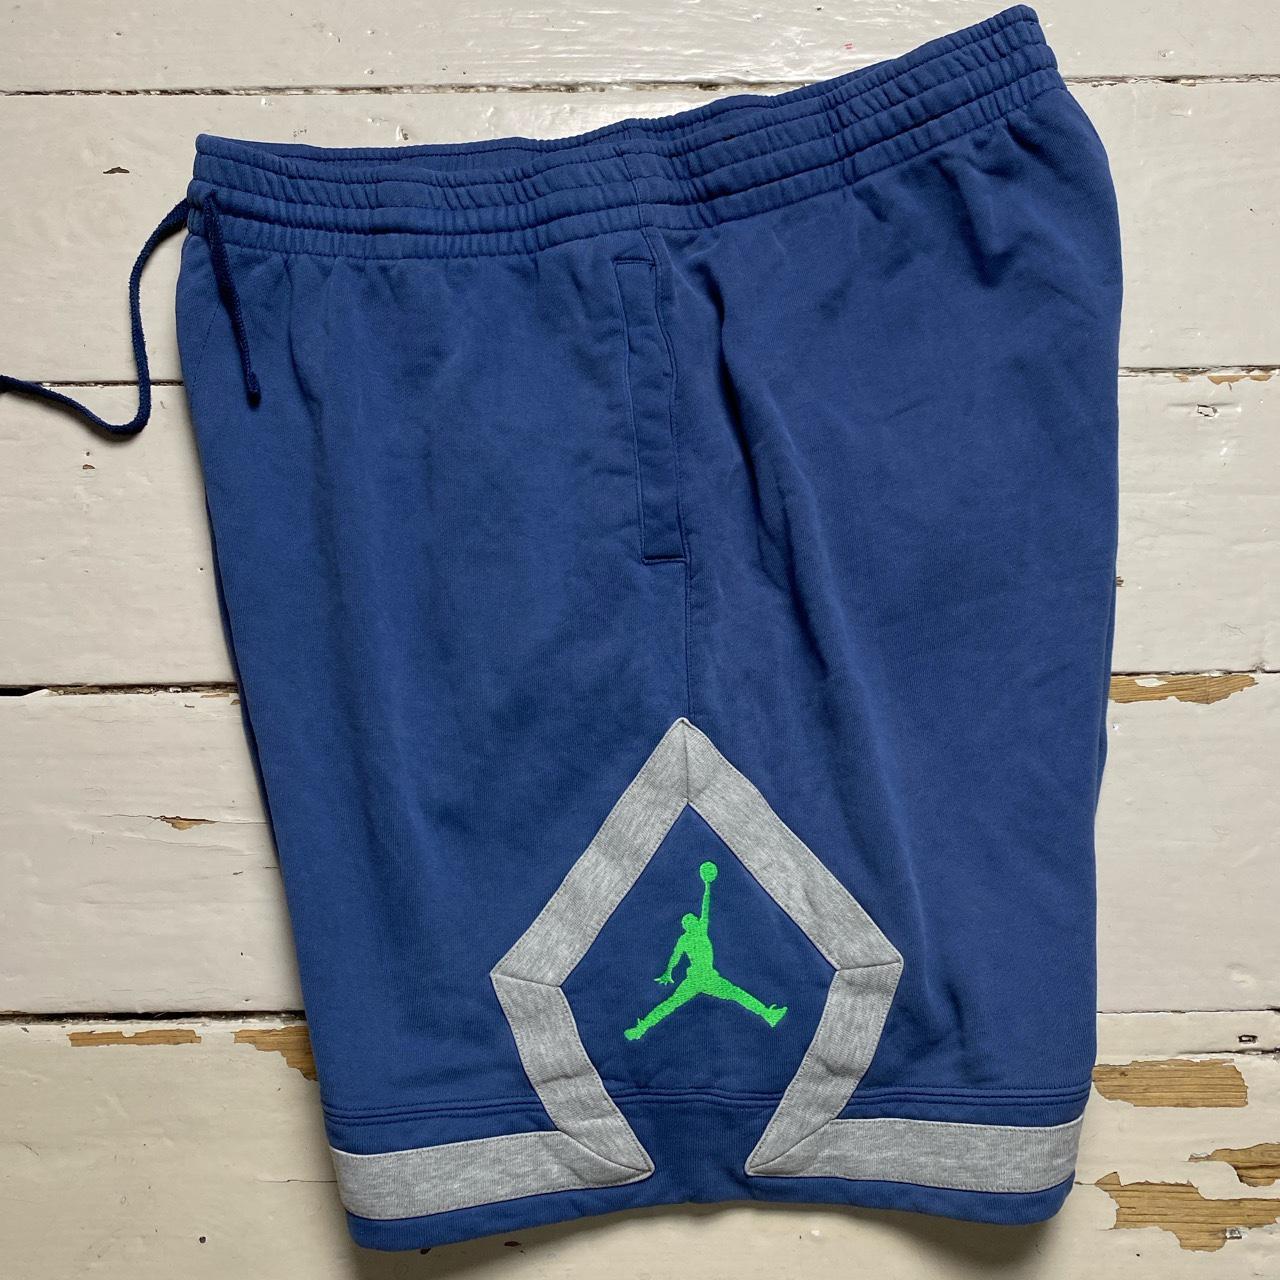 Jordan Blue and Green Shorts